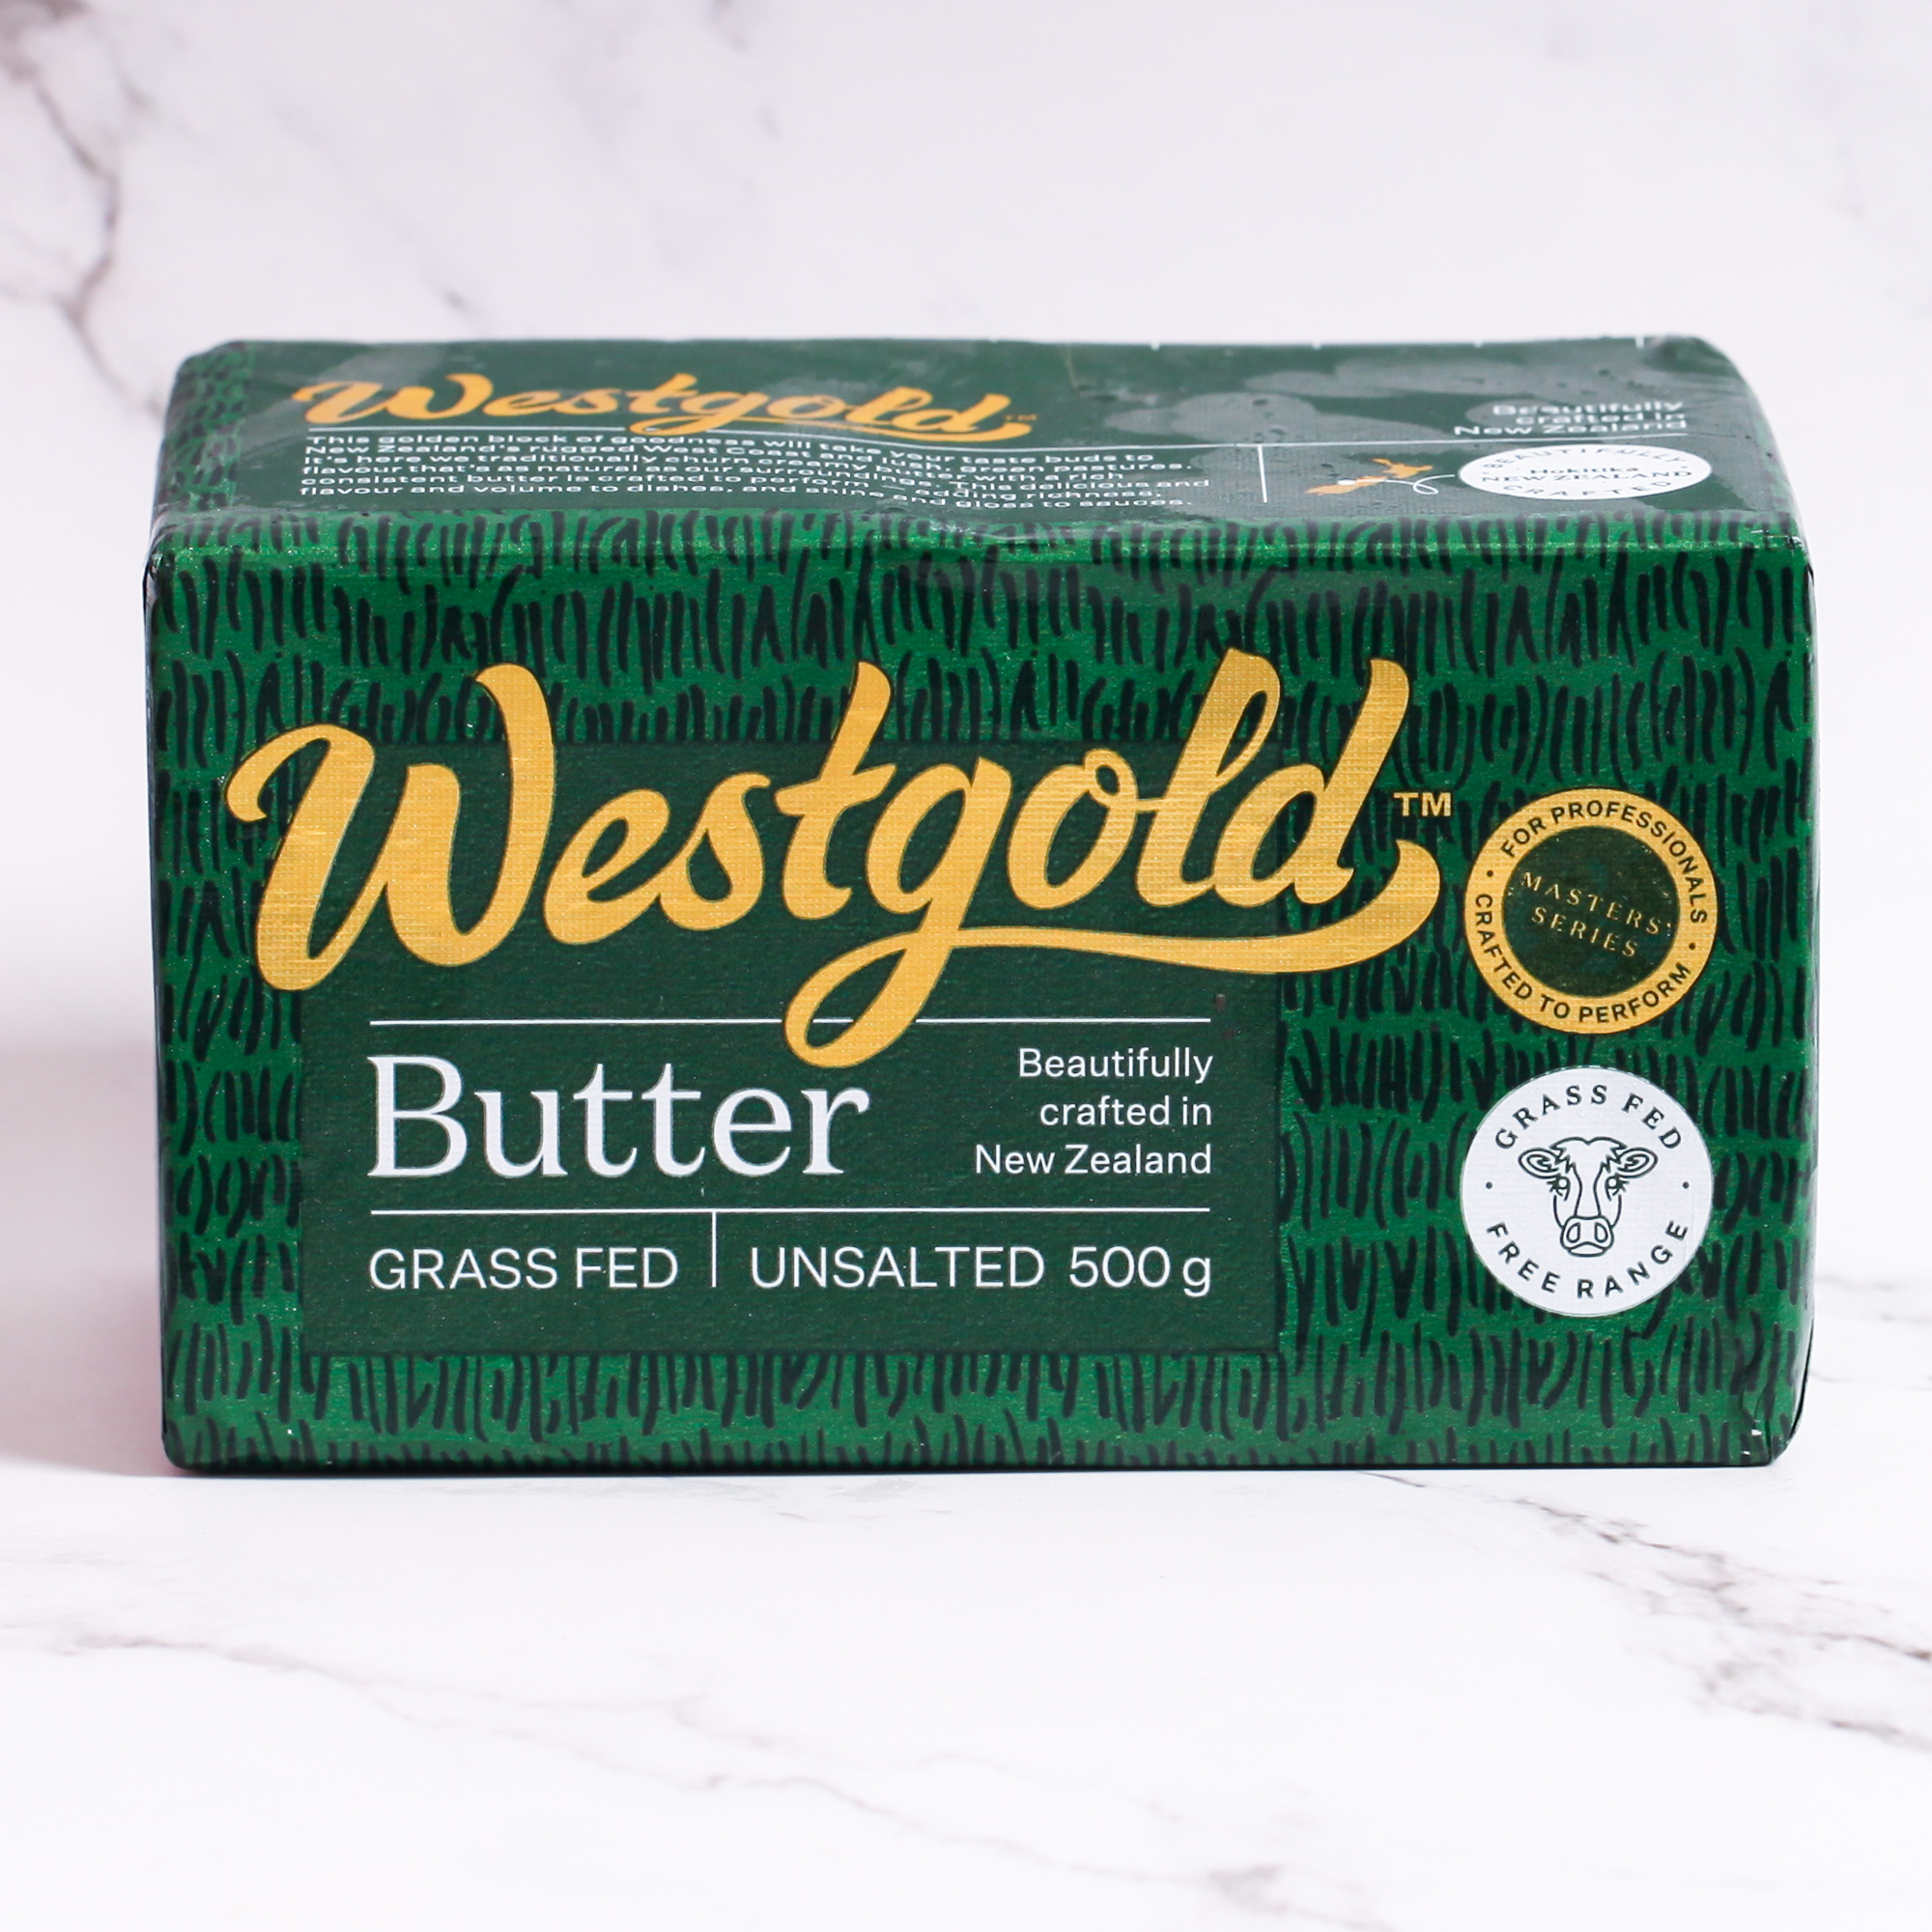 Grass-fed unsalted butter by Westgold